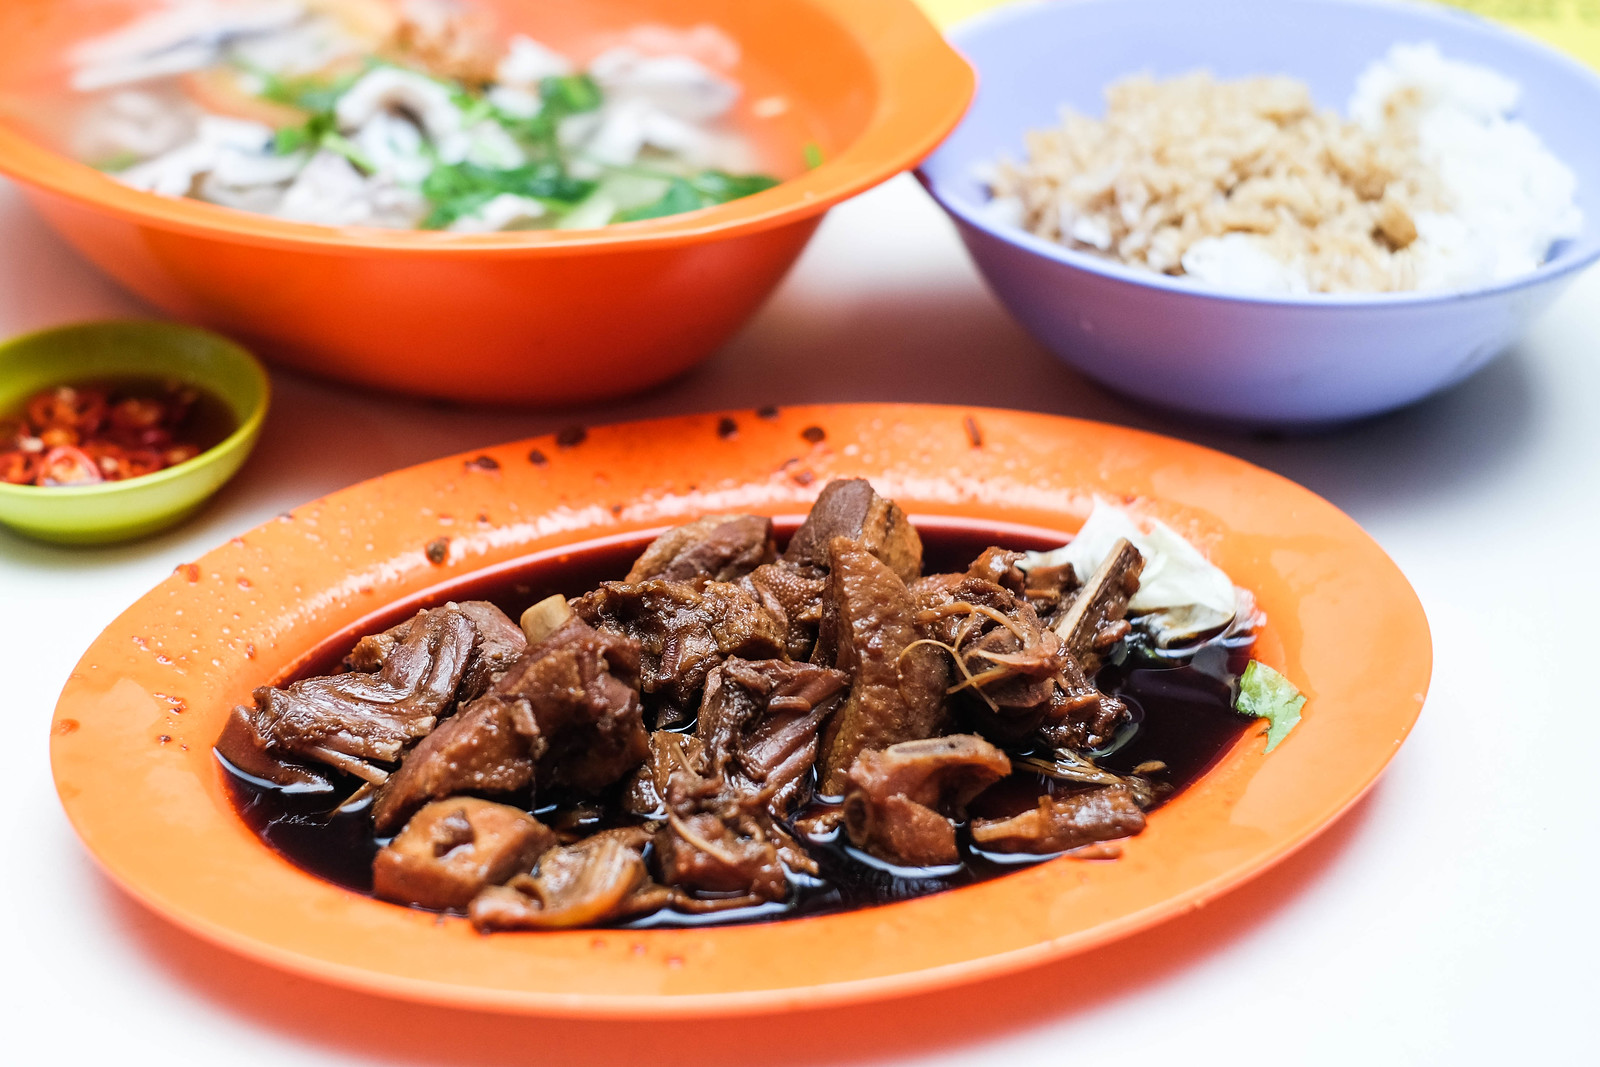 Ng Soon Kee Fish & Duck Porridge - Quality Fish Soup & Braised Duck